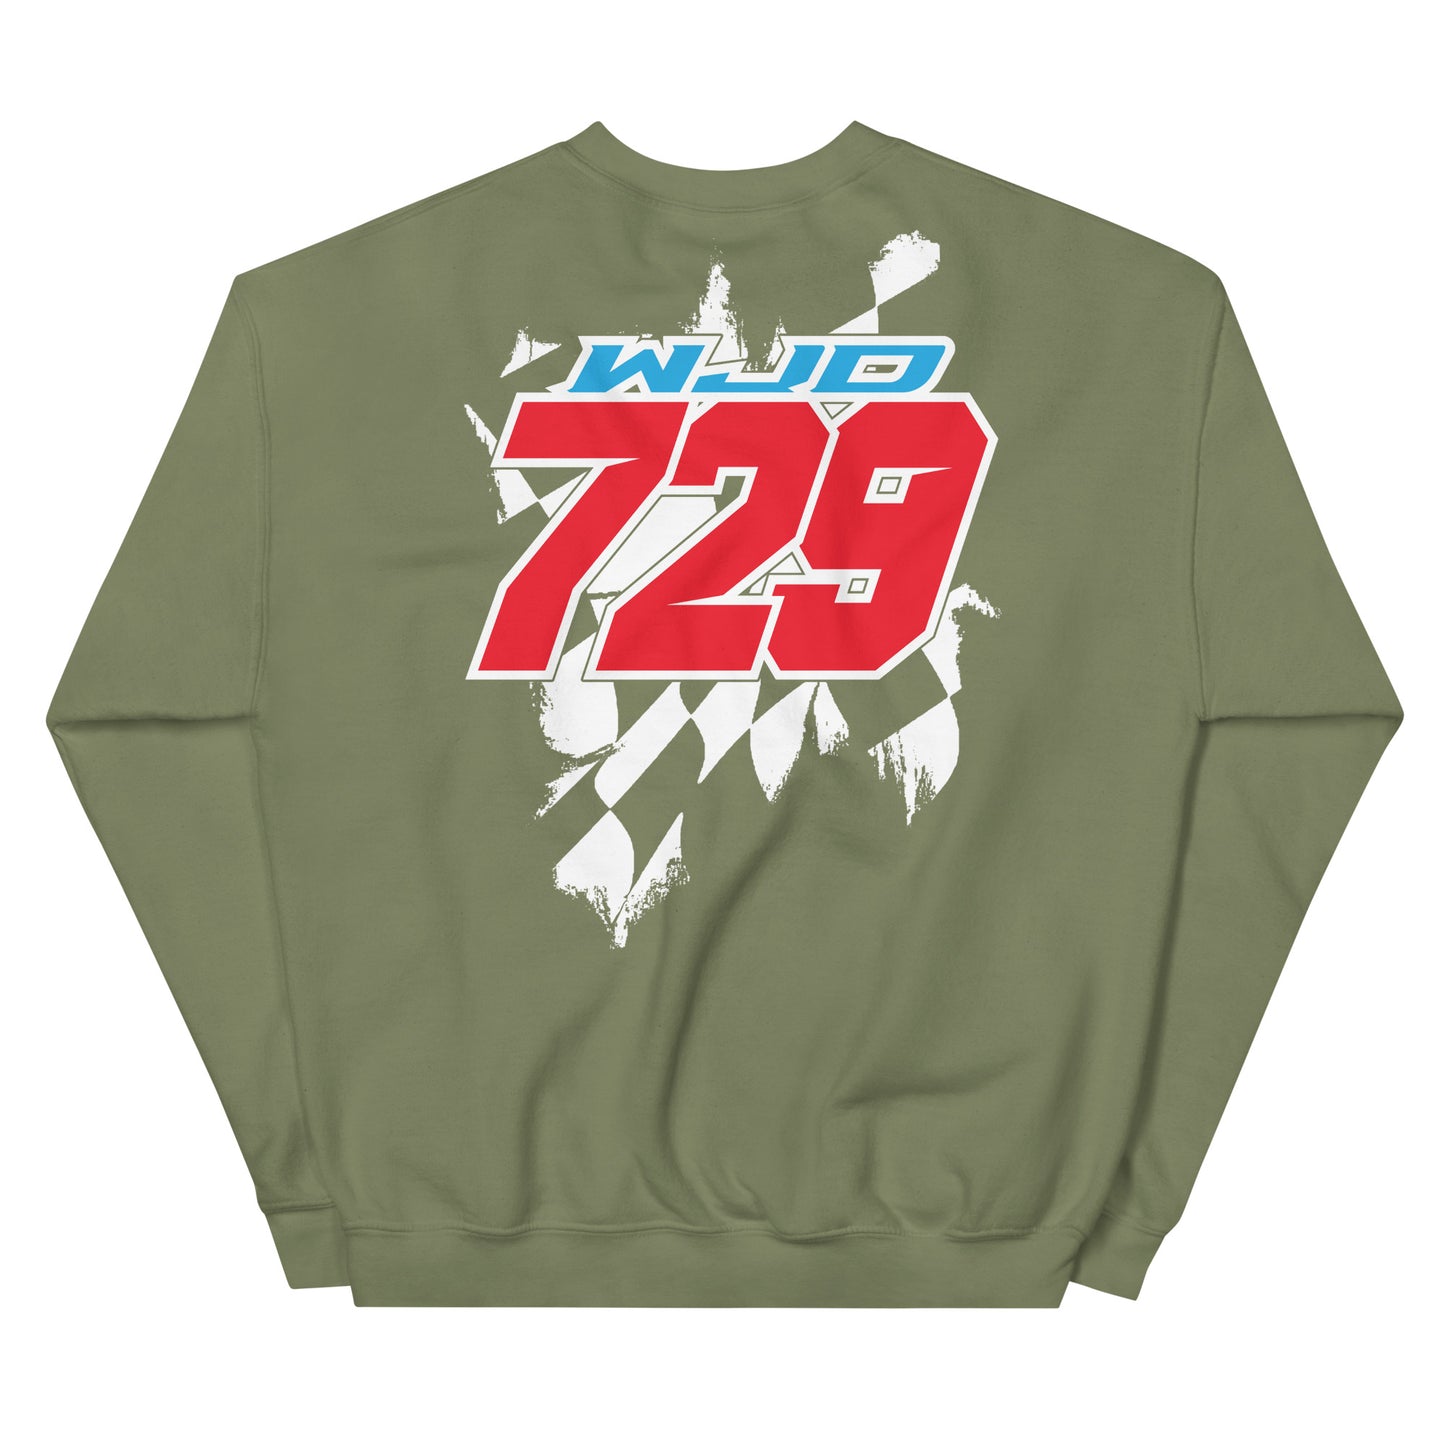 WJD 729 Crewneck Sweatshirt